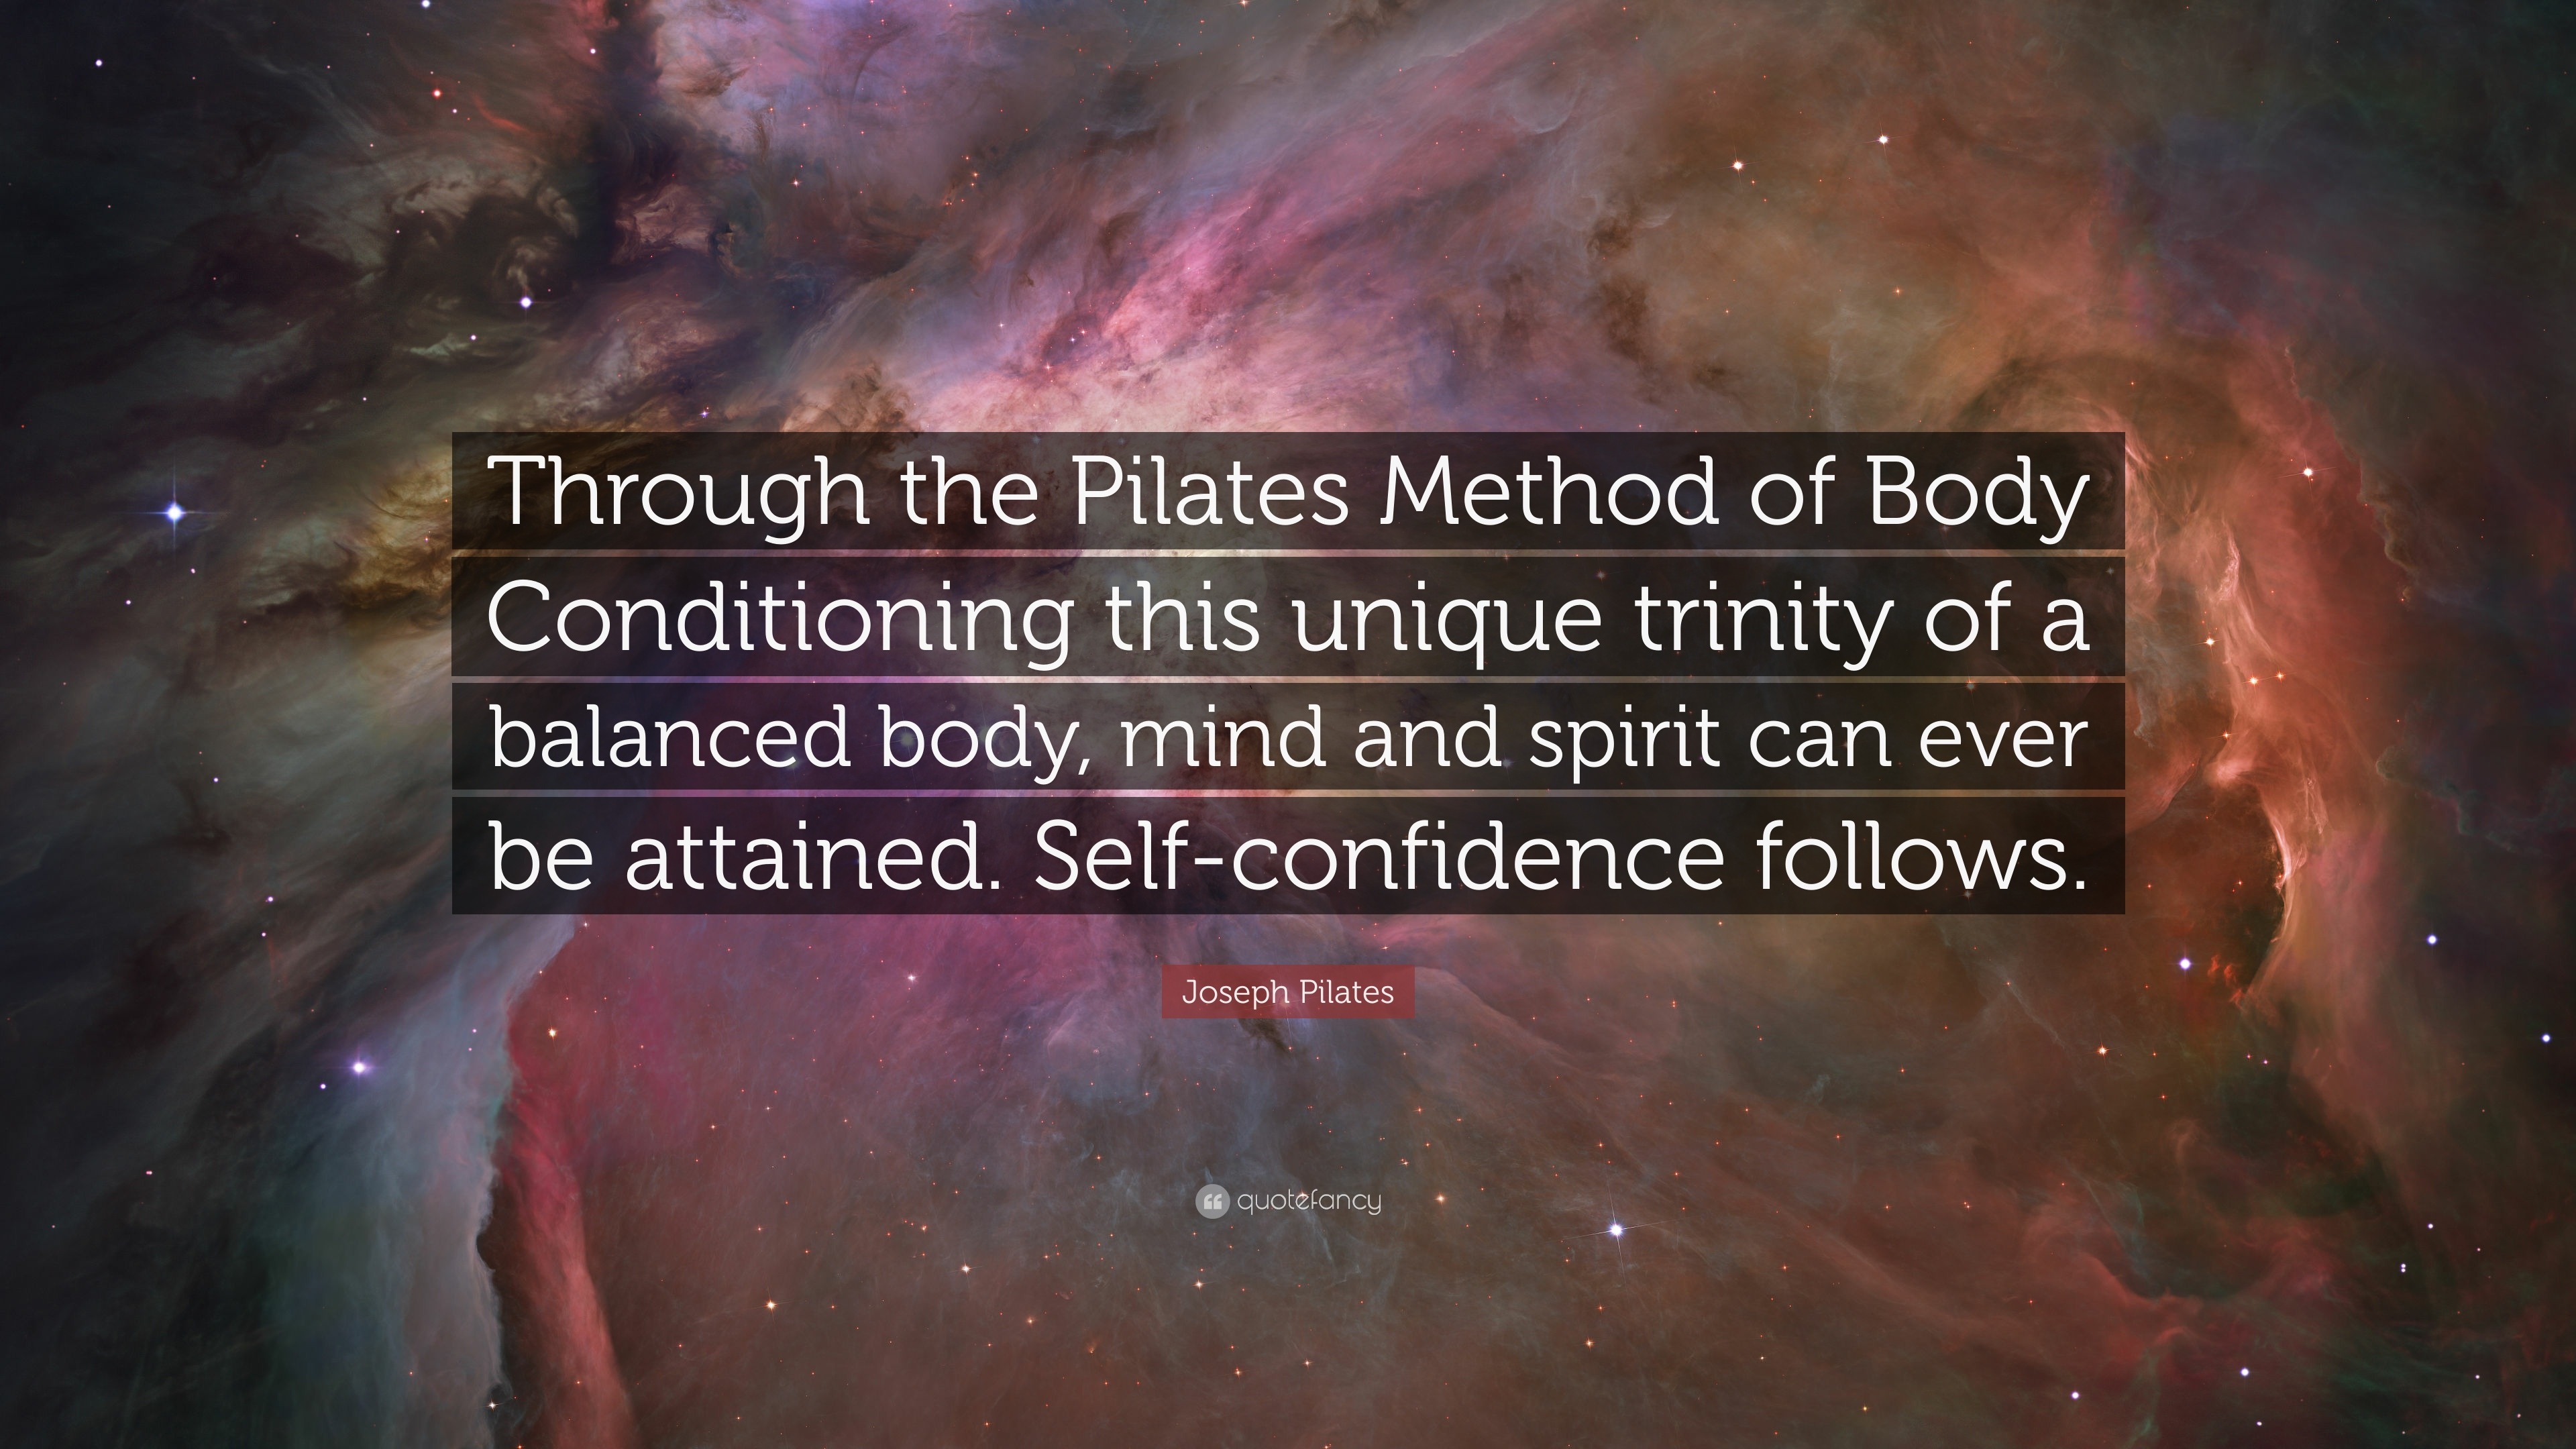 Joseph Pilates Quote: “Through the Pilates Method of Body